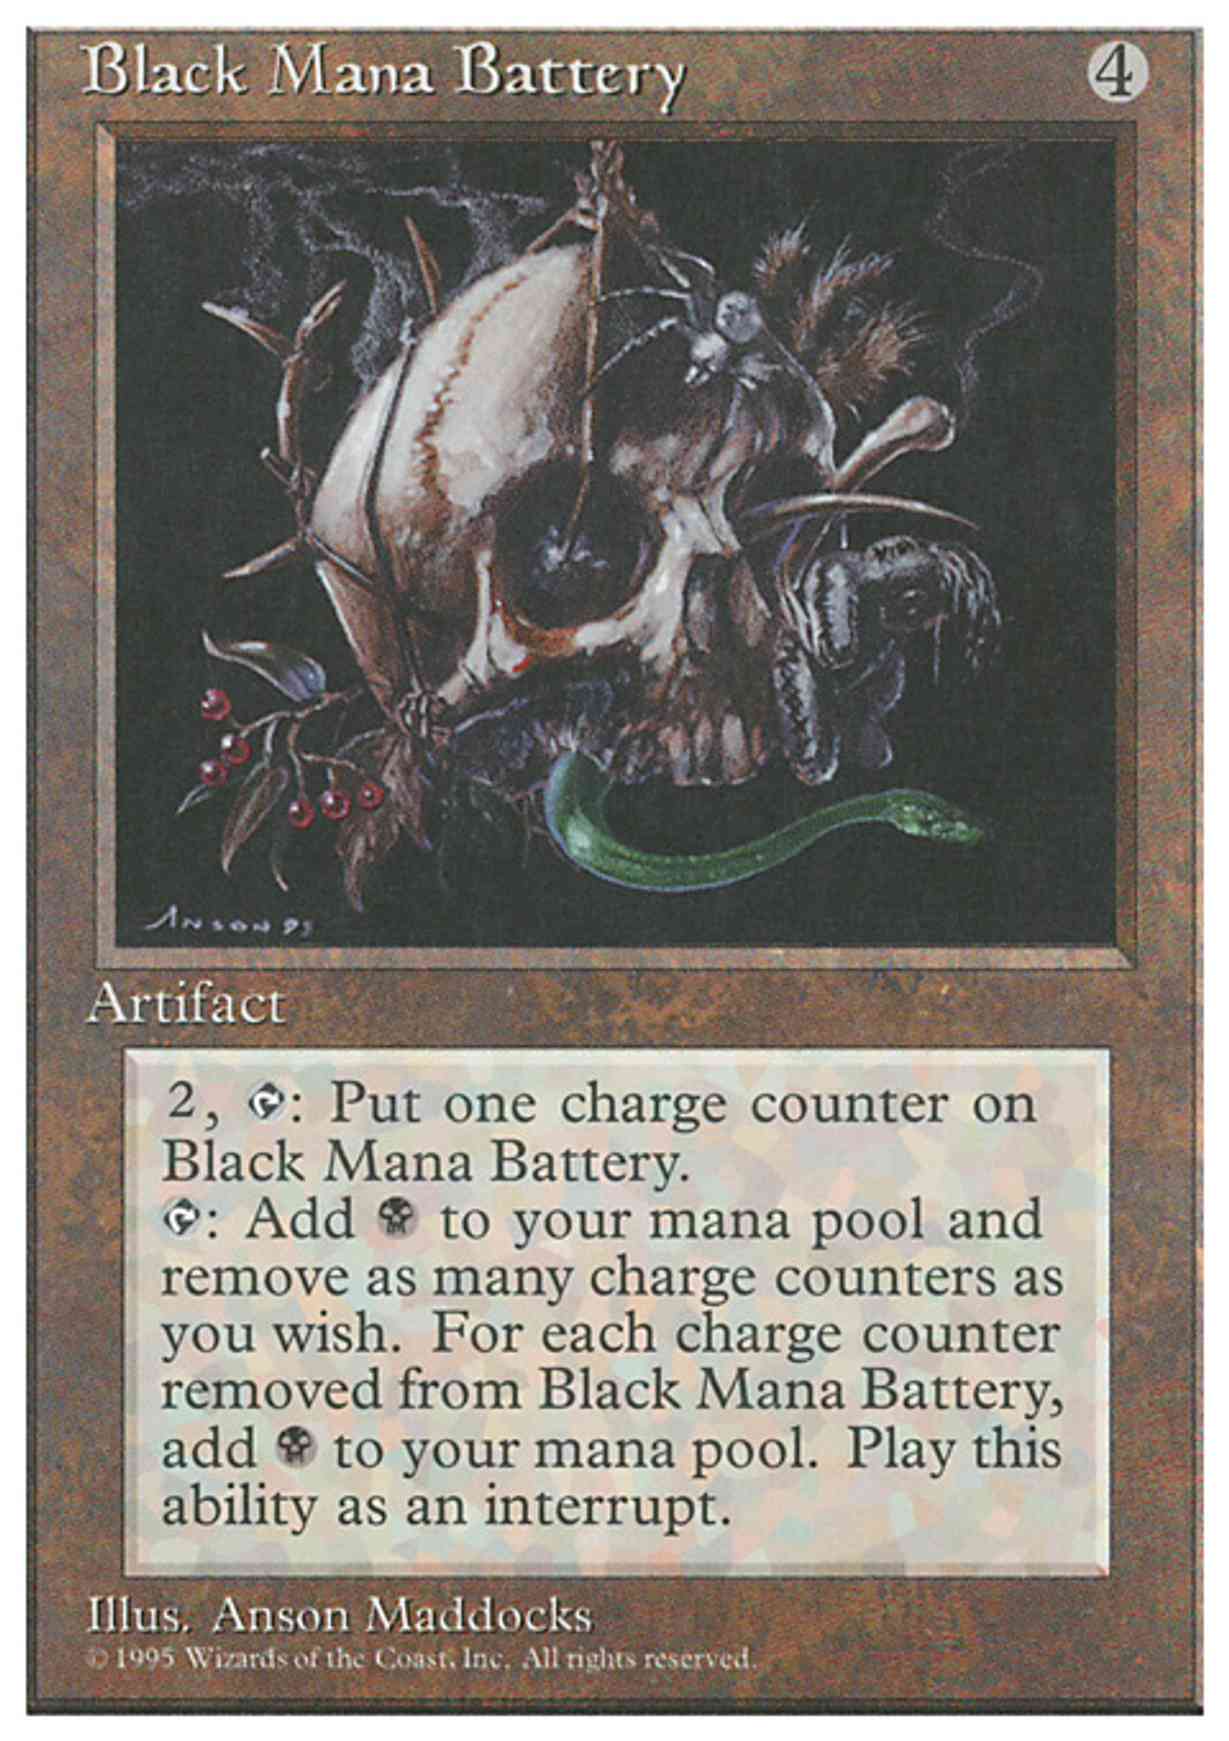 Black Mana Battery magic card front